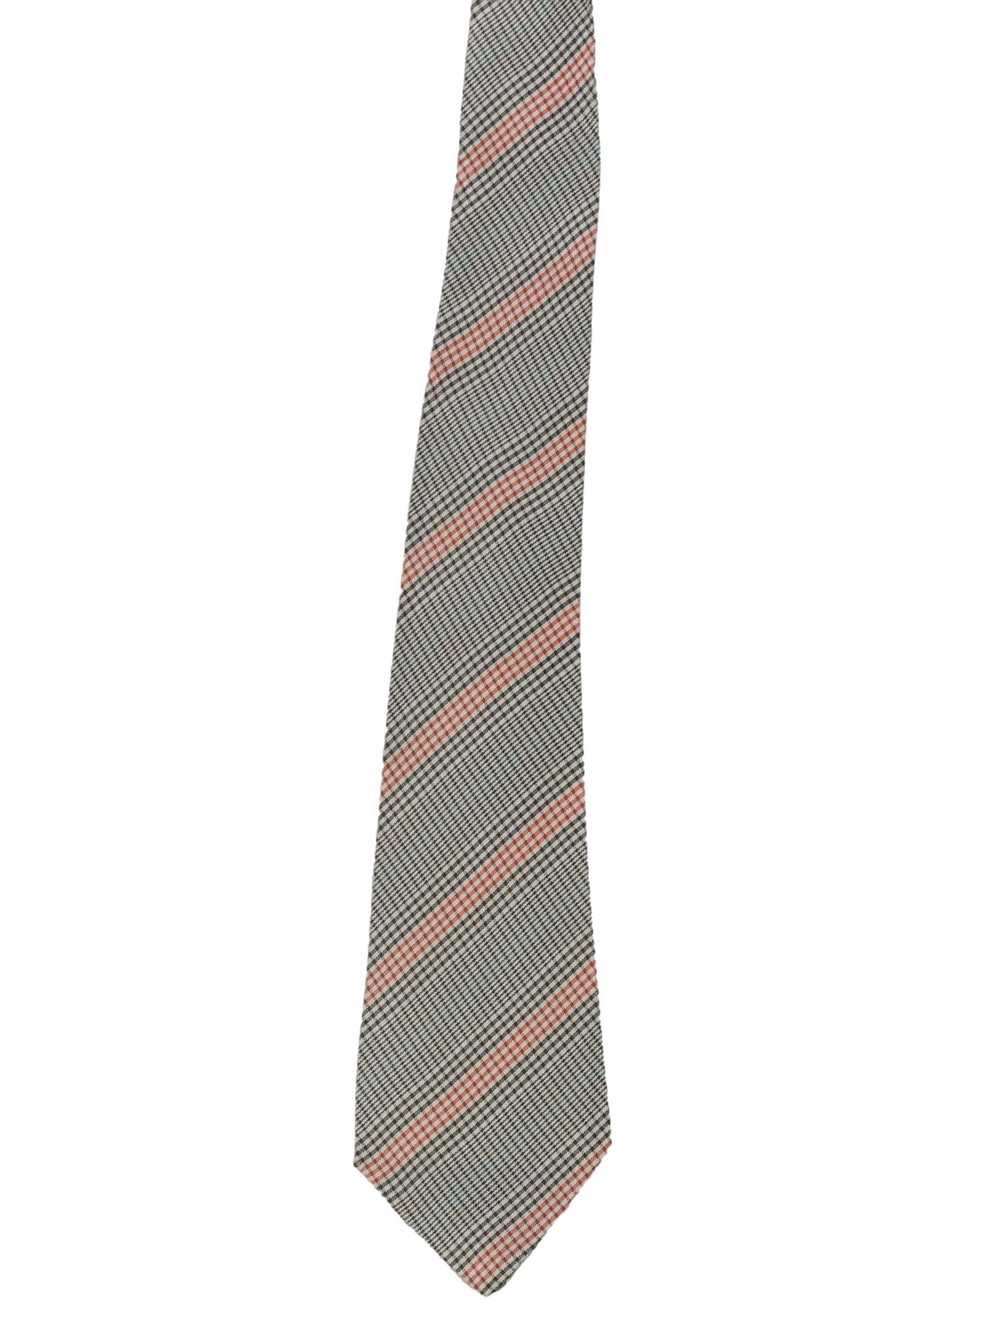 1930's Mens Necktie - image 1